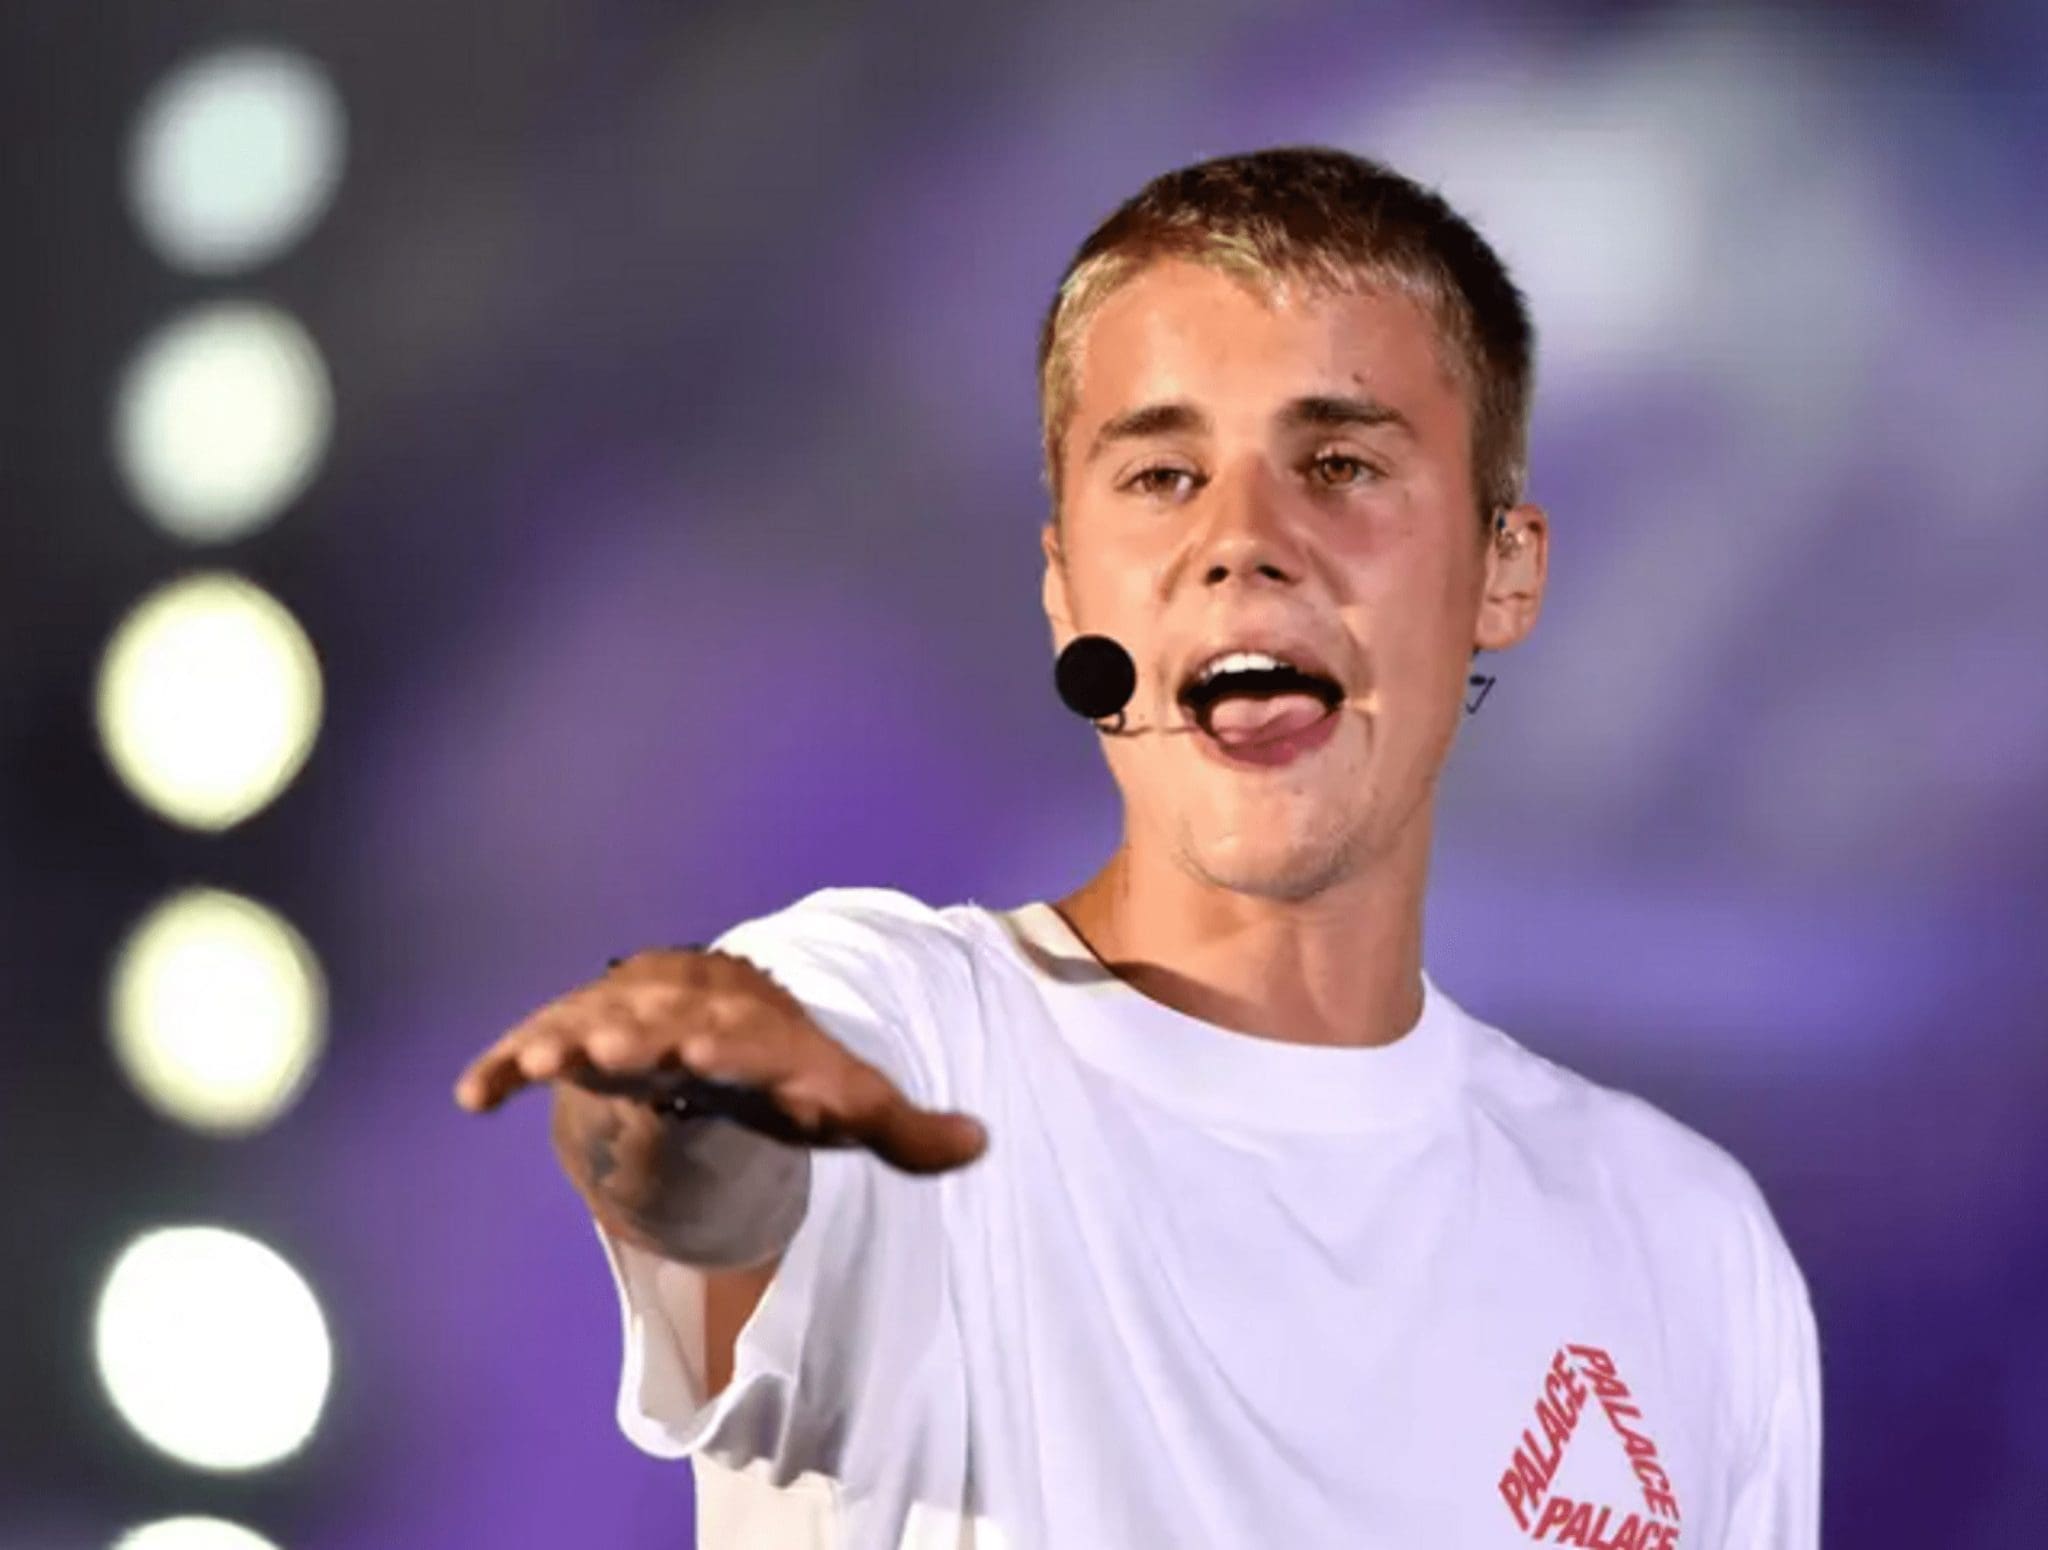 Doctors spoke about Justin Bieber's illness